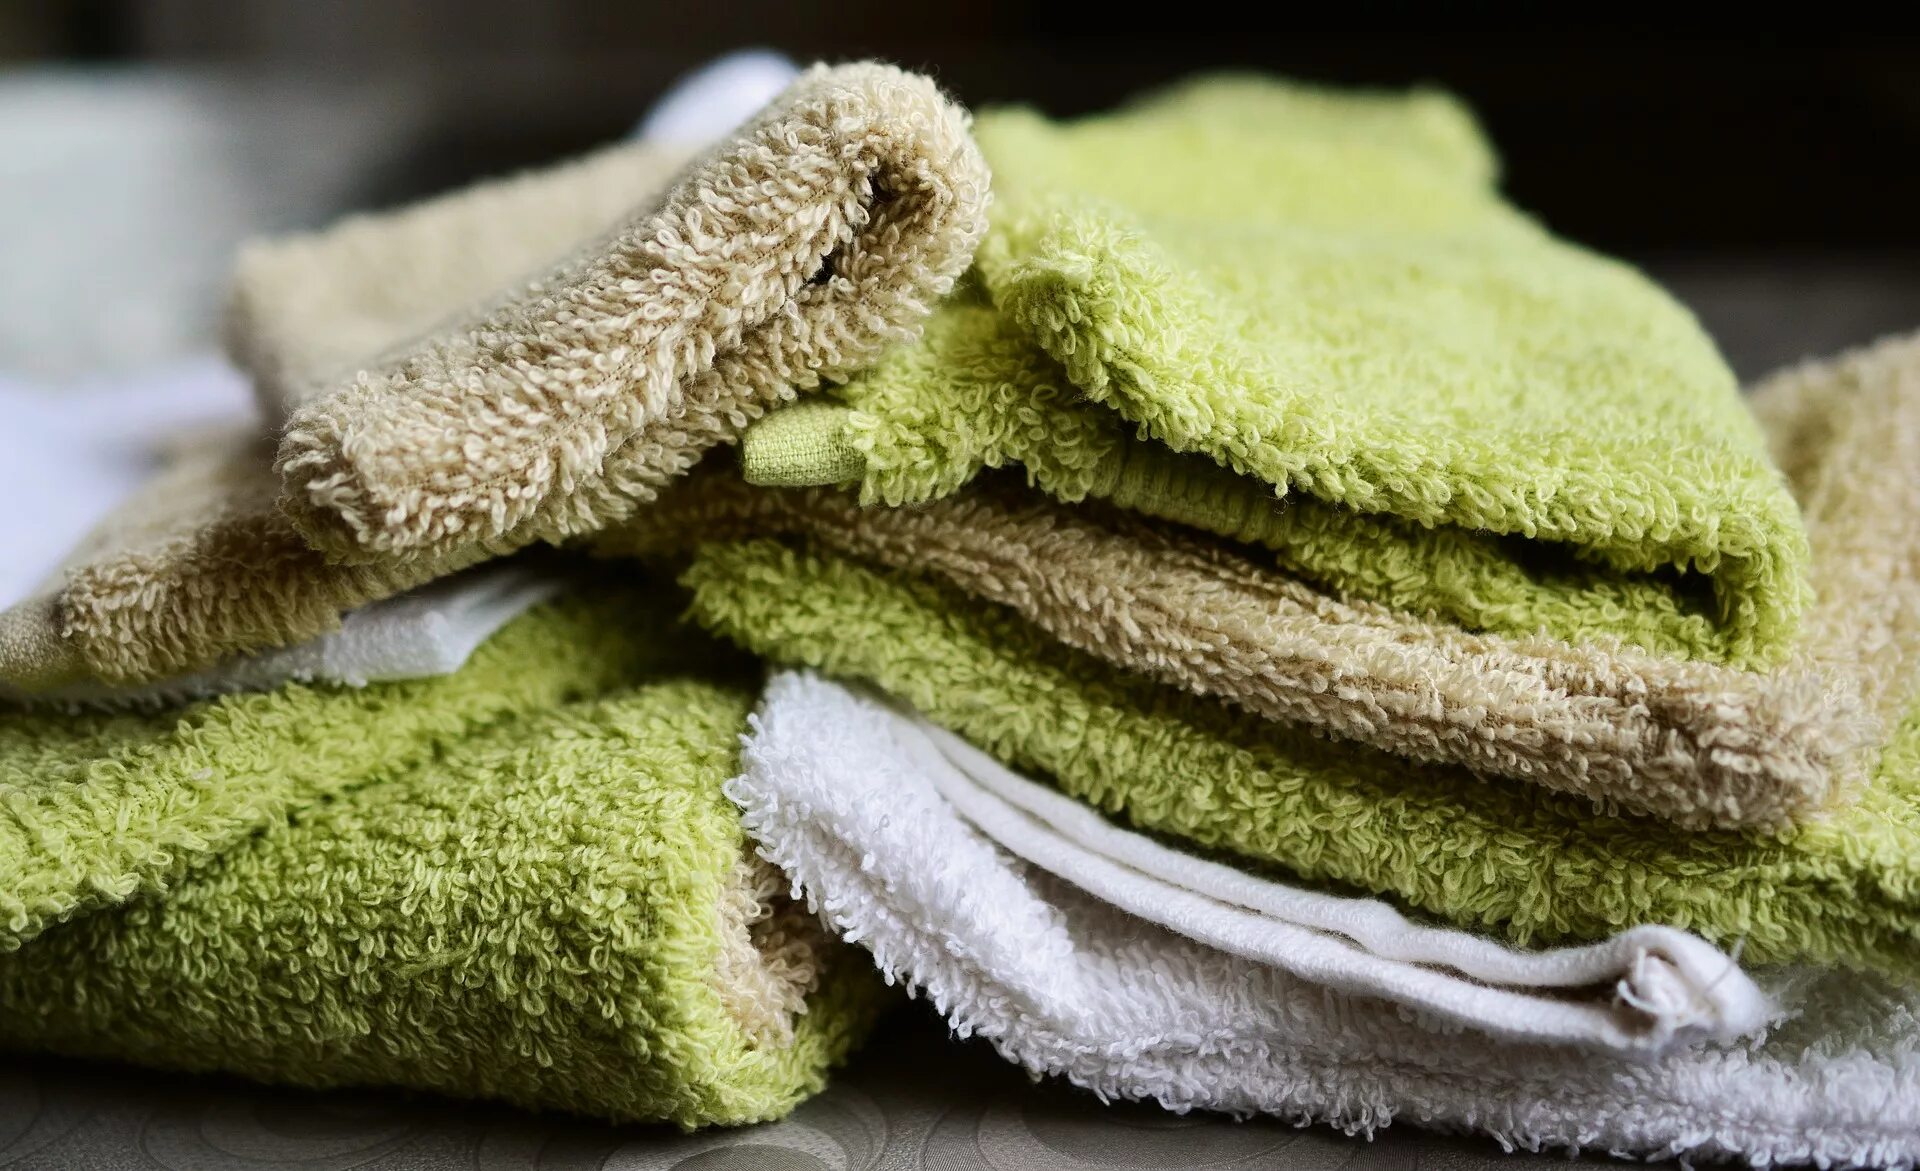 Метод полотенца. Полотенце махровое. Мягкое пушистое полотенце. Старое махровое полотенце. Грязные махровые полотенца.